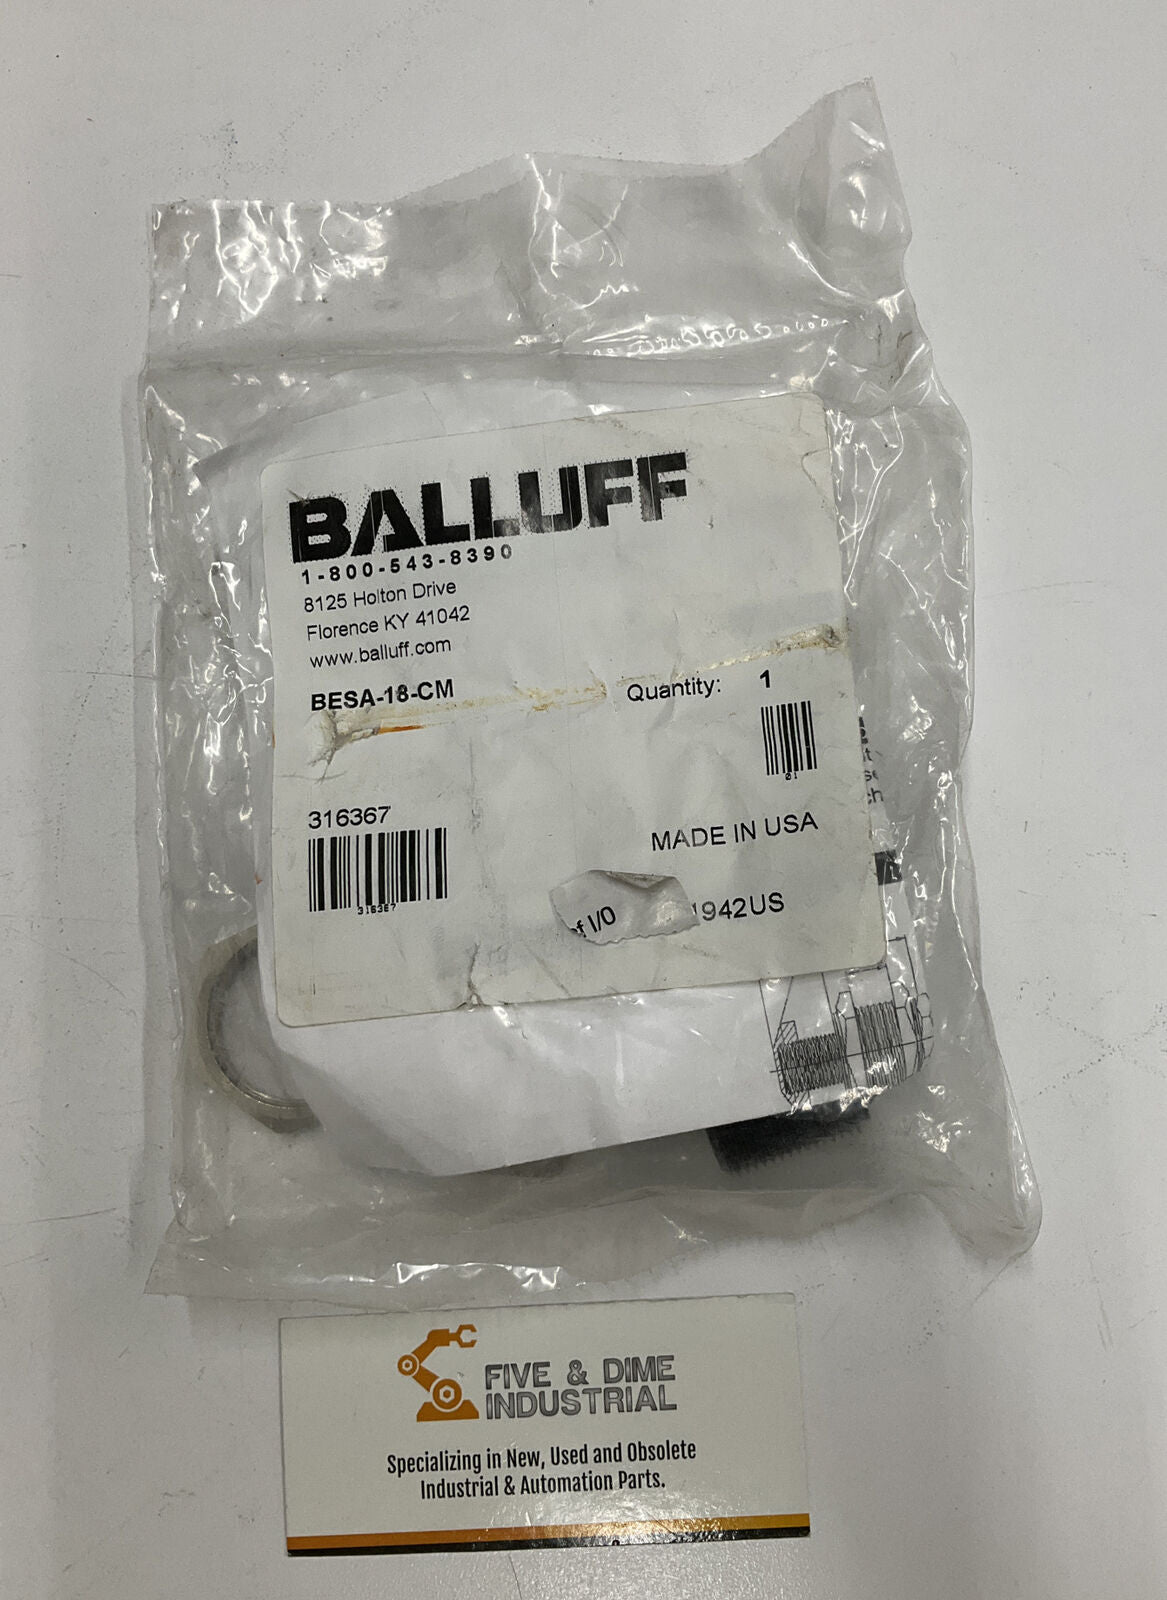 Balluff BESA-18-CM Cushion Mount for Proximity Switch Bracket (BL176)